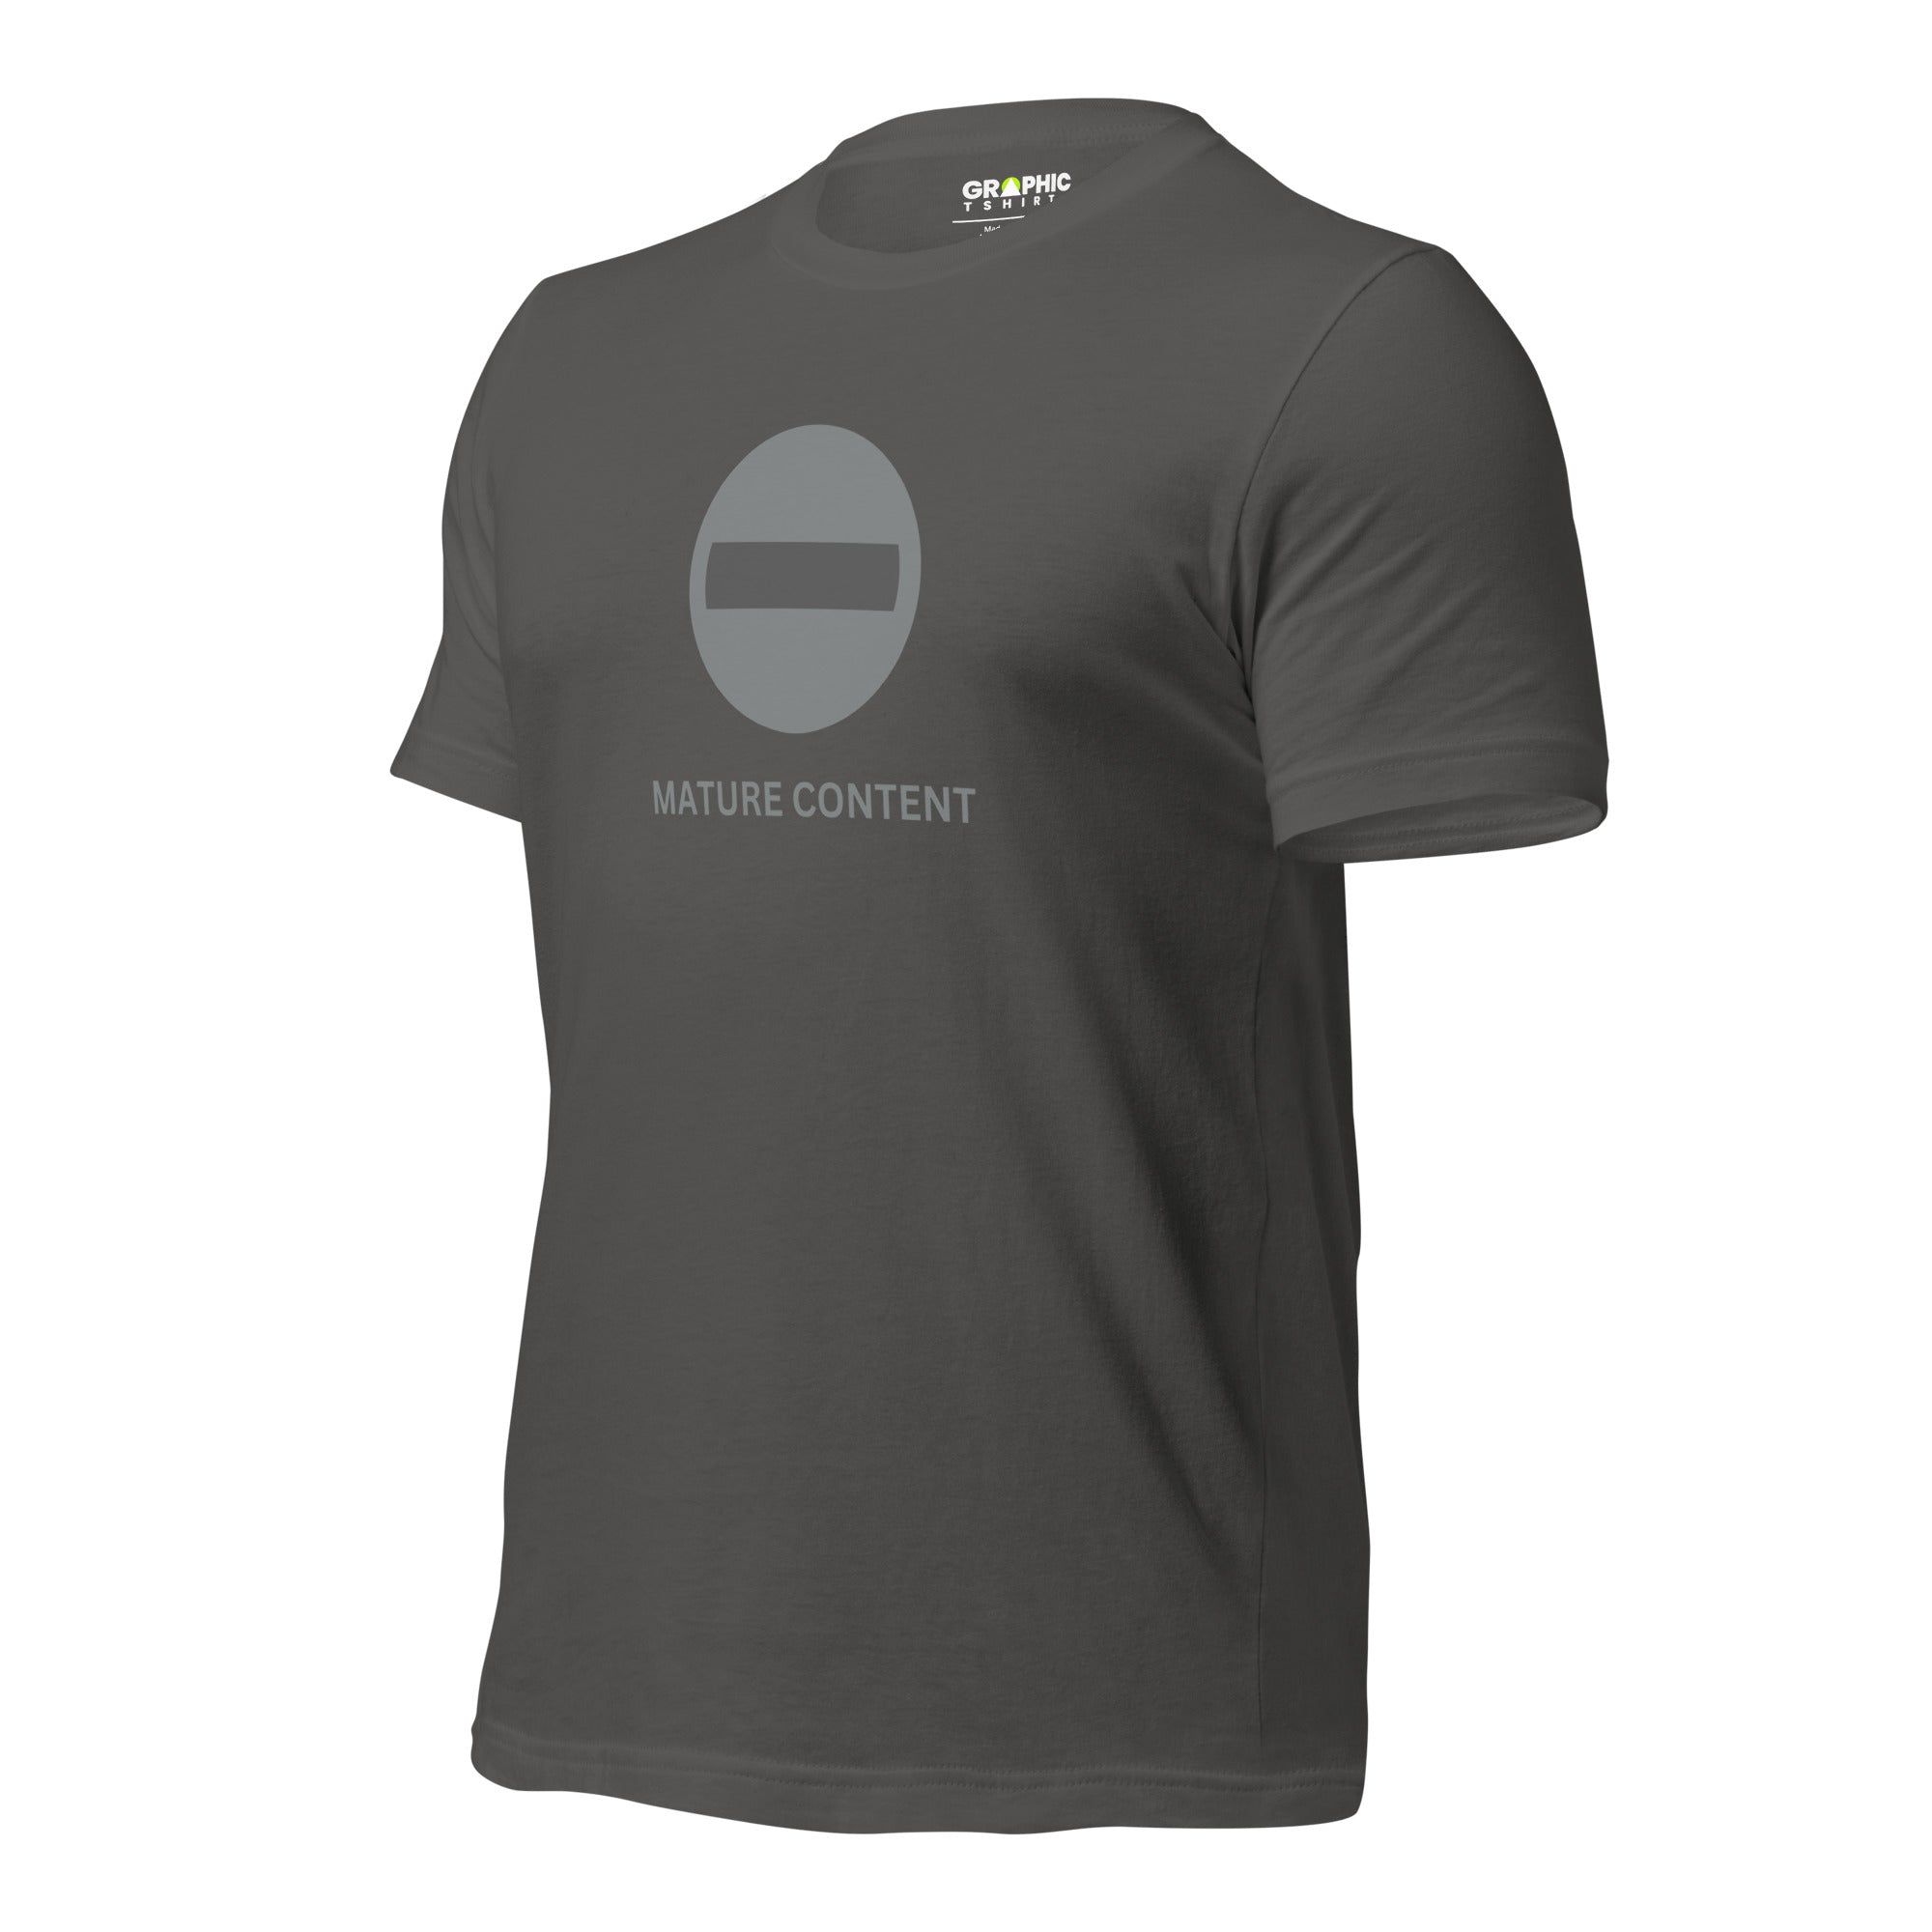 Unisex Crew Neck T-Shirt - Mature Content - GRAPHIC T-SHIRTS